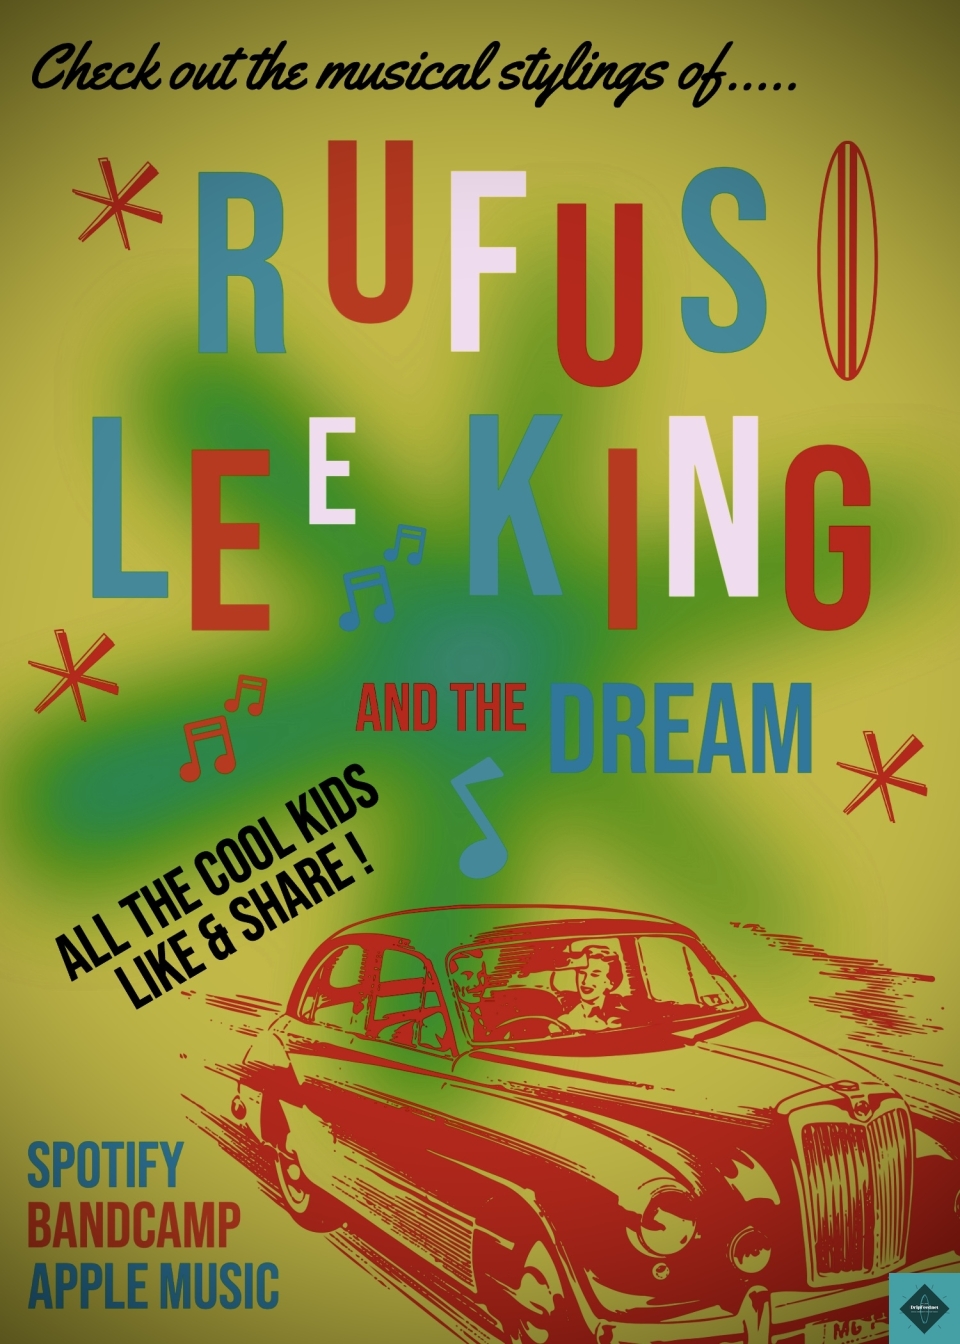 8f935ff5dc2e4b0a76d1dd56 Rufus Lee King and the Dream | DripFeed.net